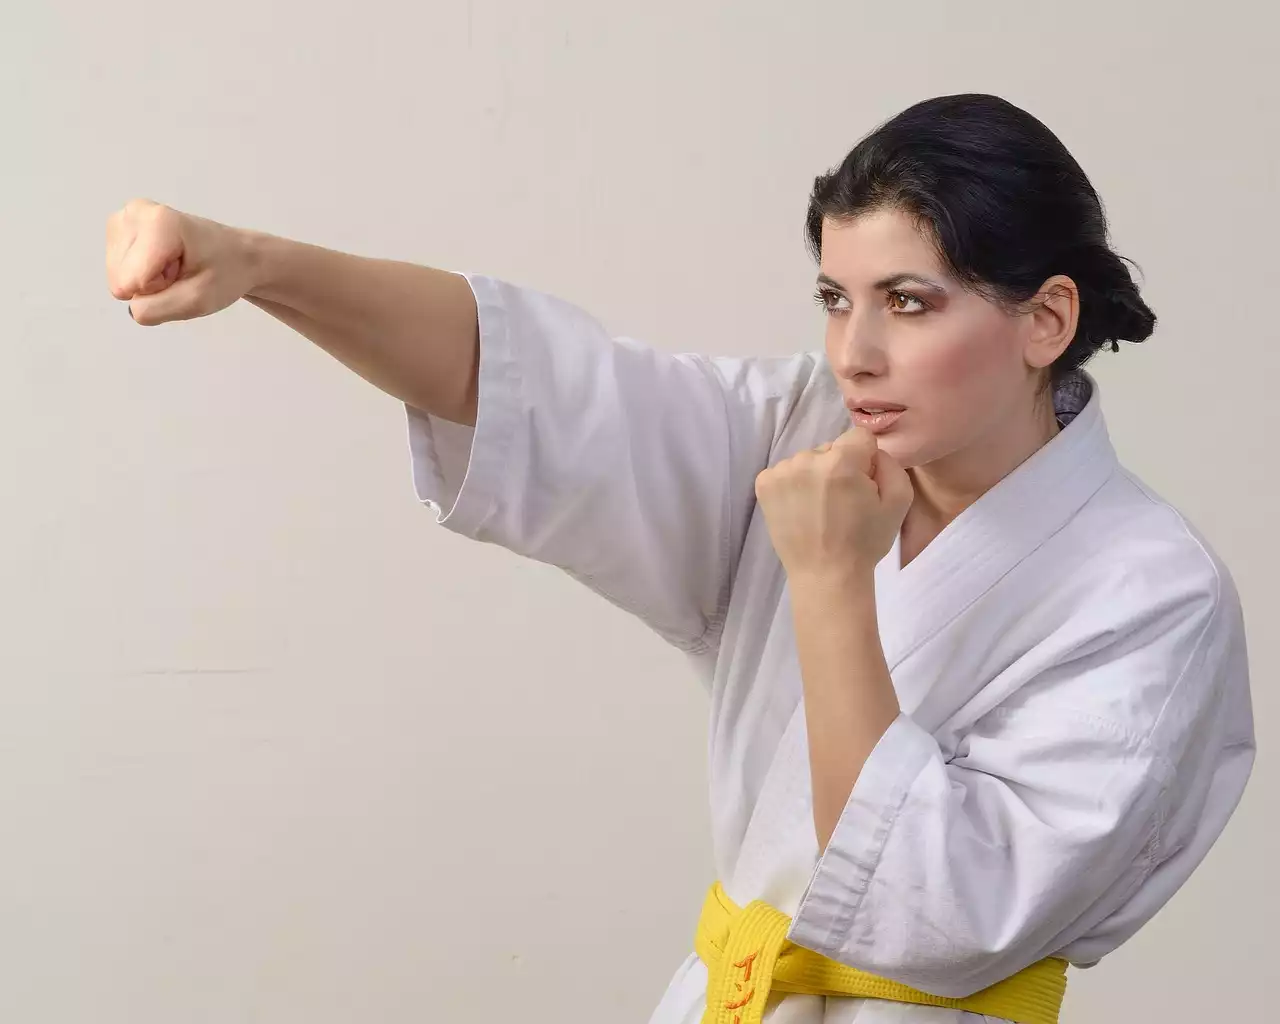 Teaching Judo to Kids: Tips and Strategies for Teaching Judo to Children